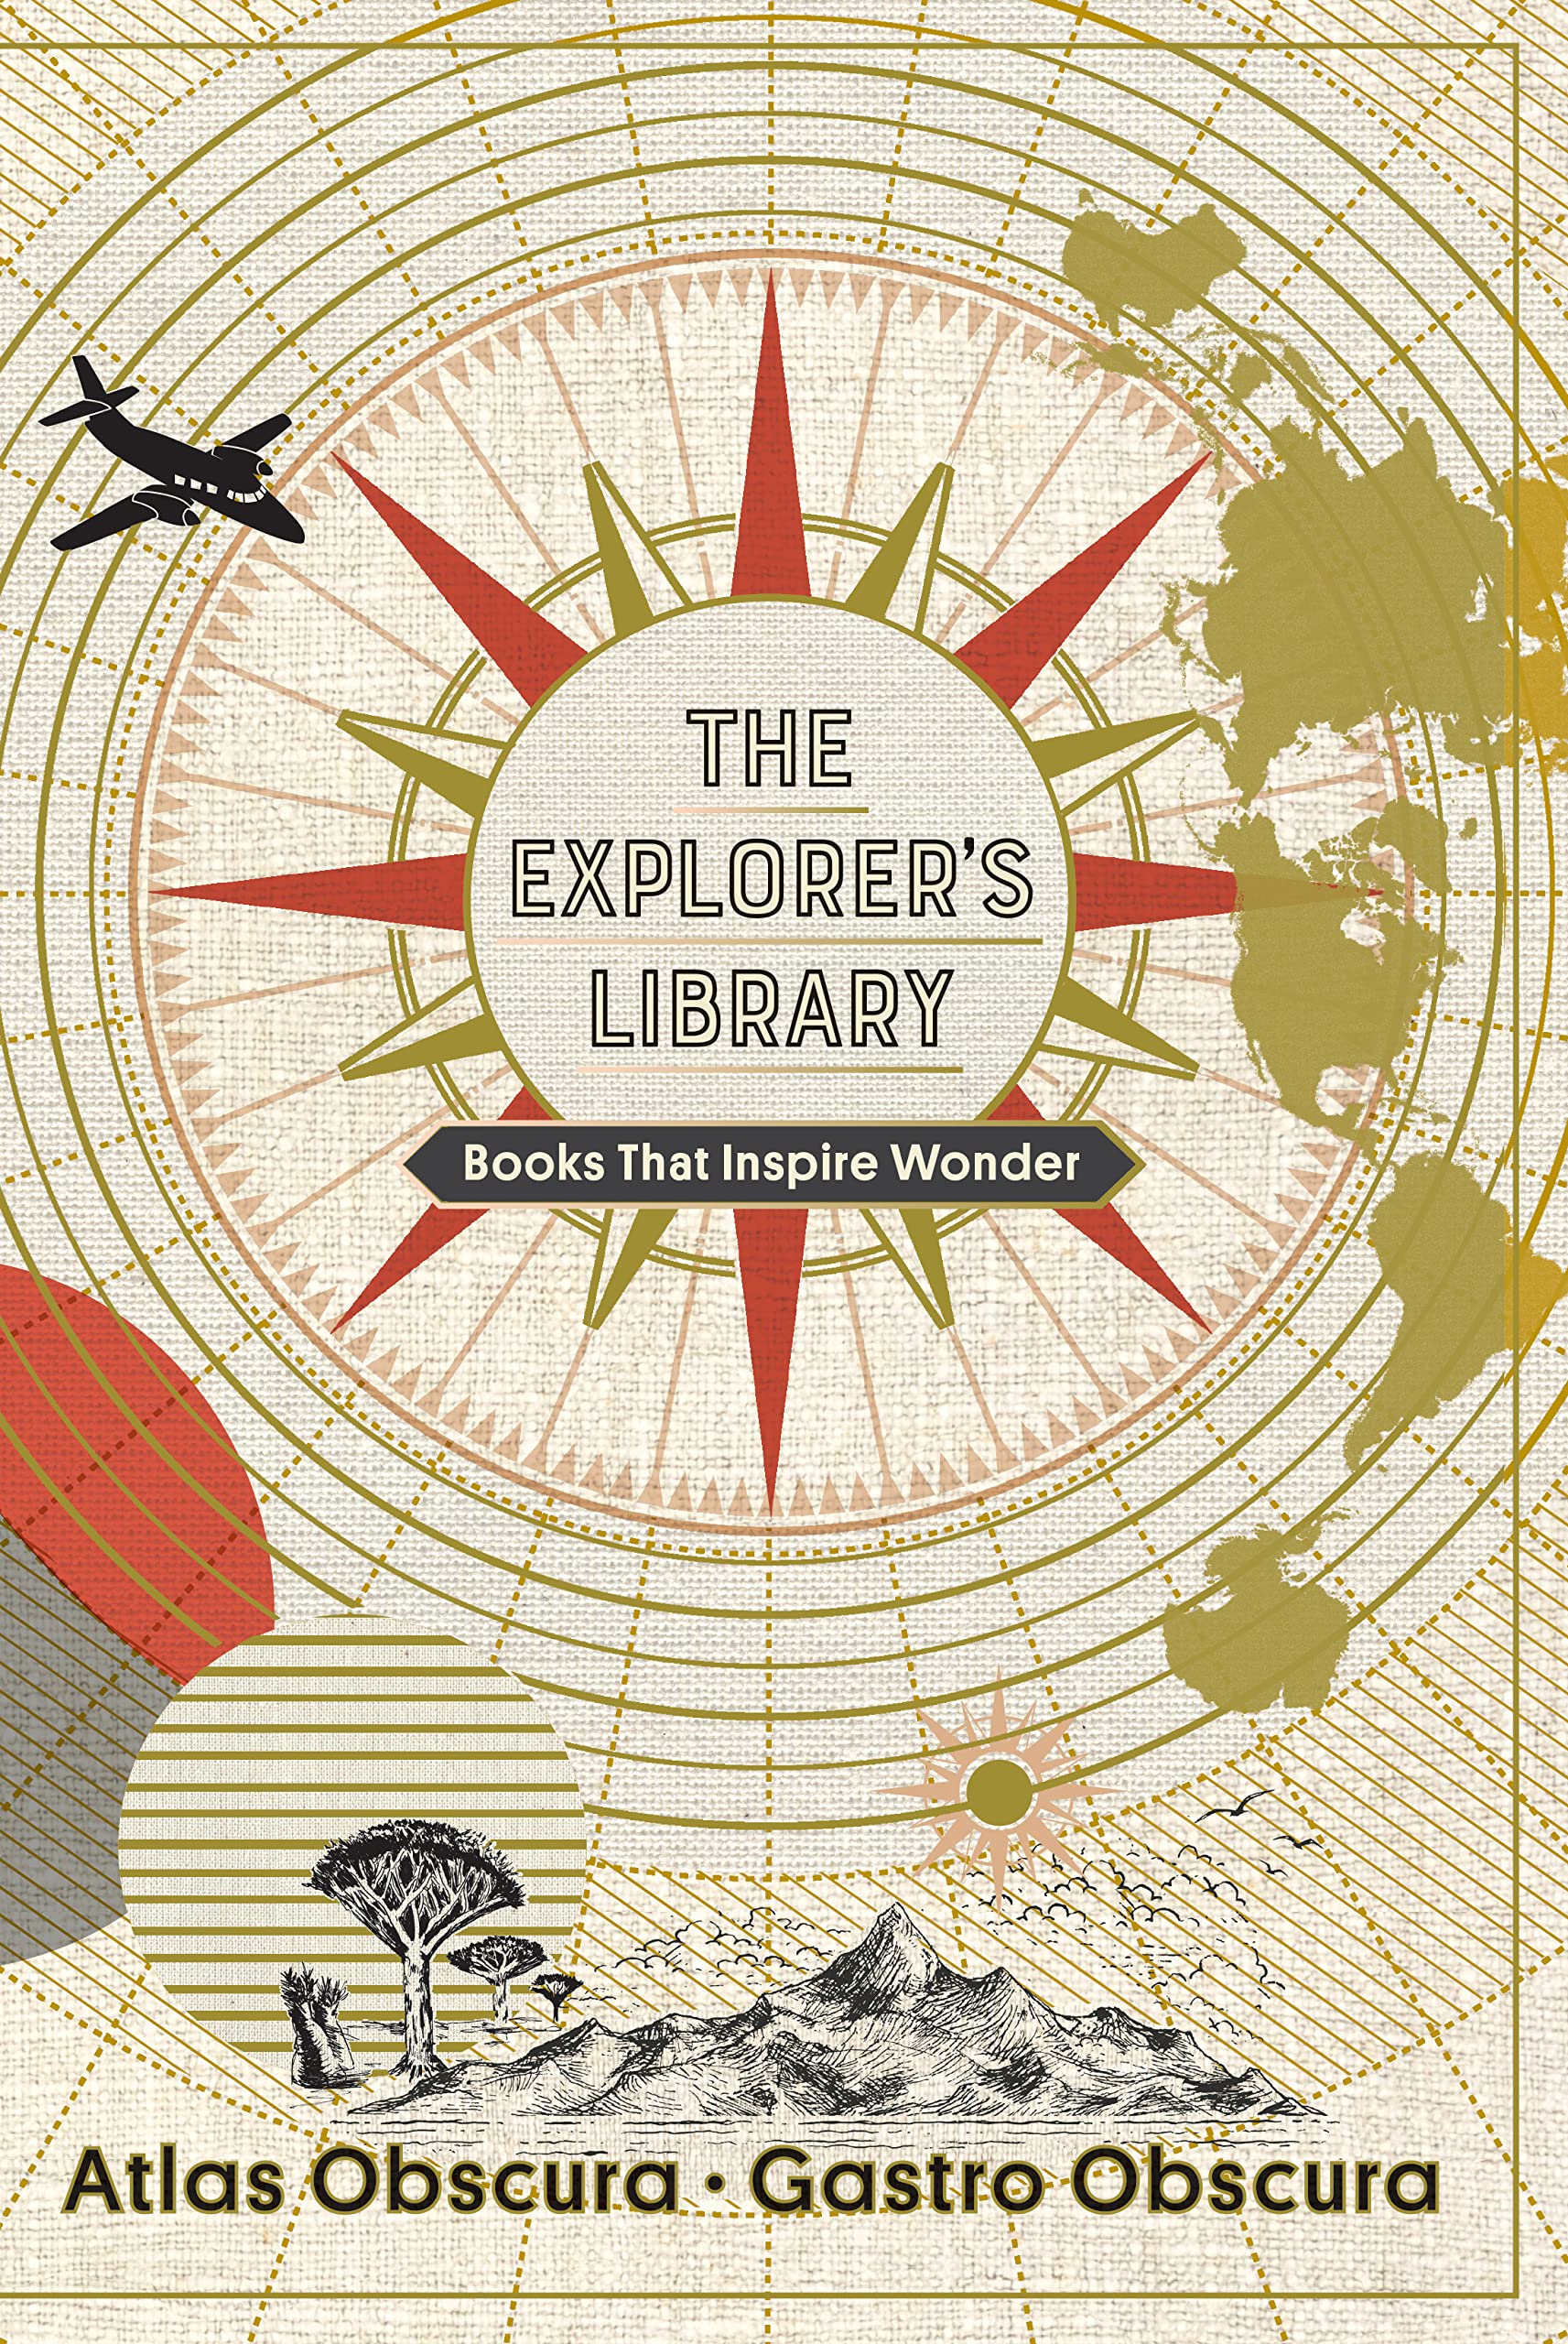 The Explorer's Library: Atlas Obscura and Gastro Obscura